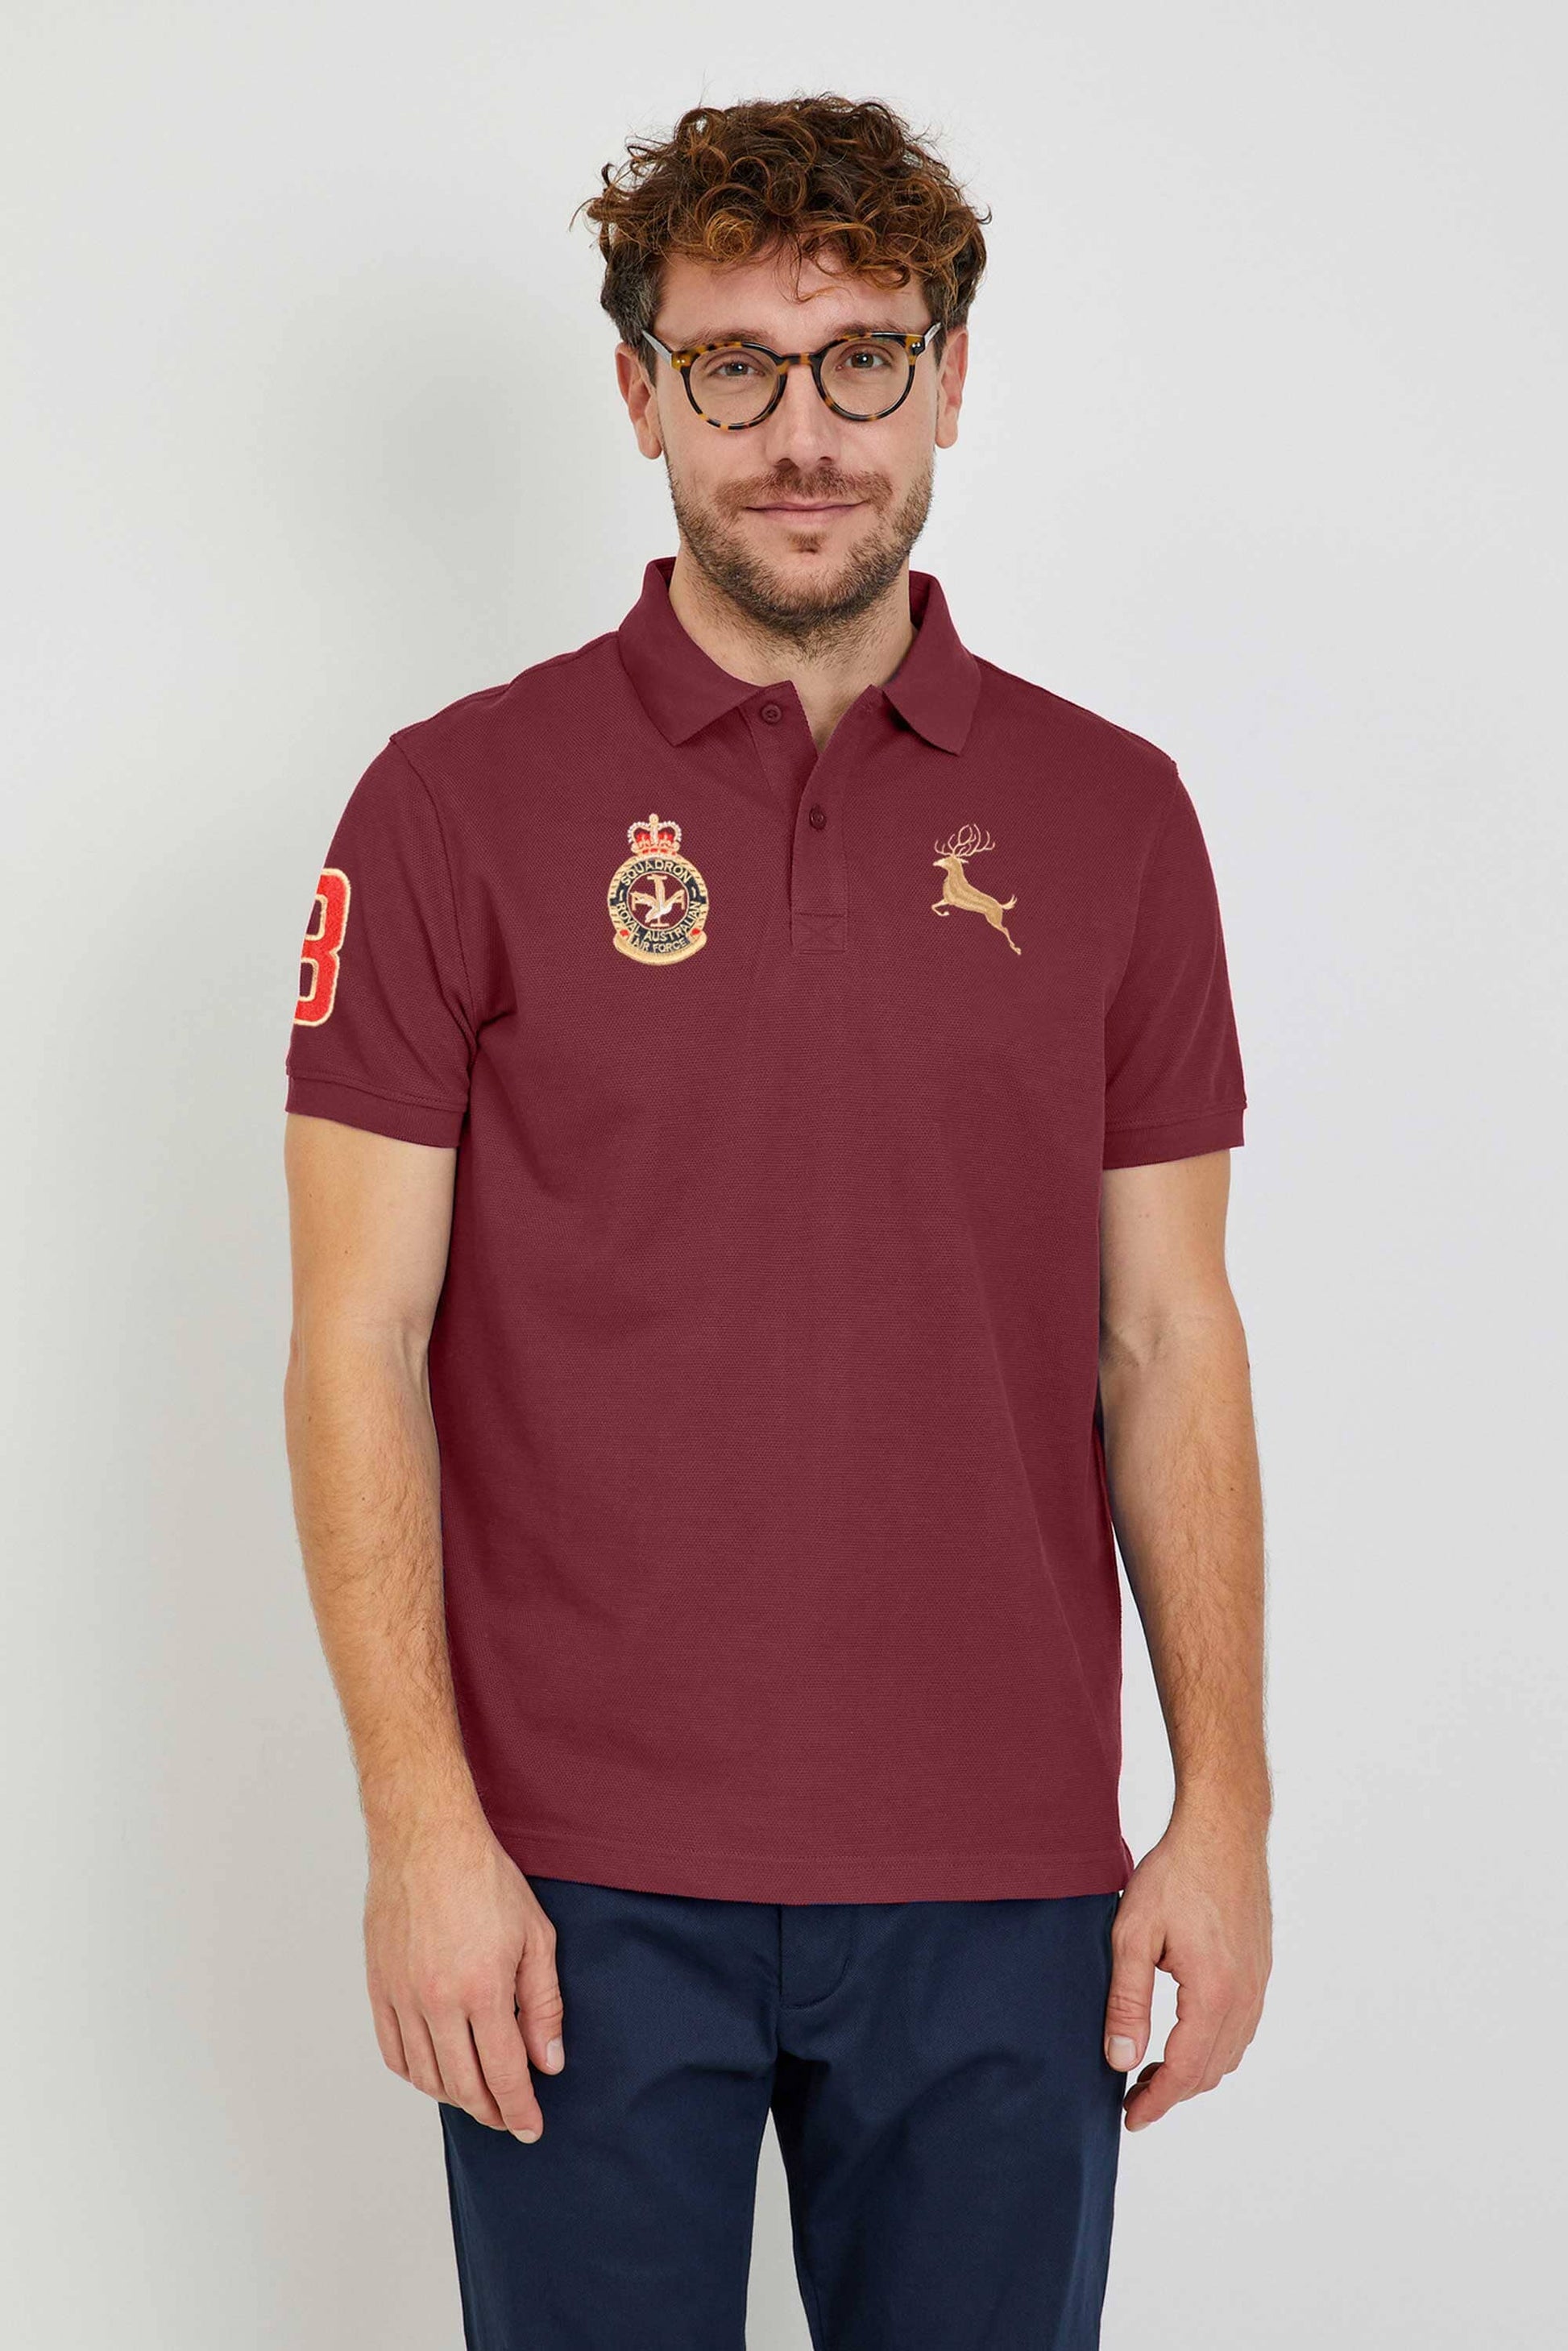 Polo Republica Men's Moose Crest & 8 Embroidered Short Sleeve Polo Shirt Men's Polo Shirt Polo Republica 